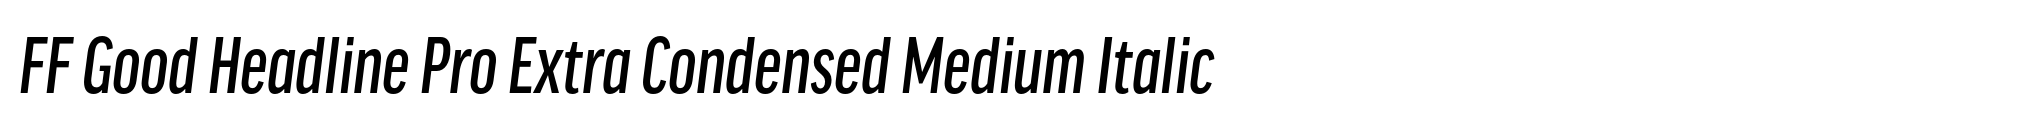 FF Good Headline Pro Extra Condensed Medium Italic image